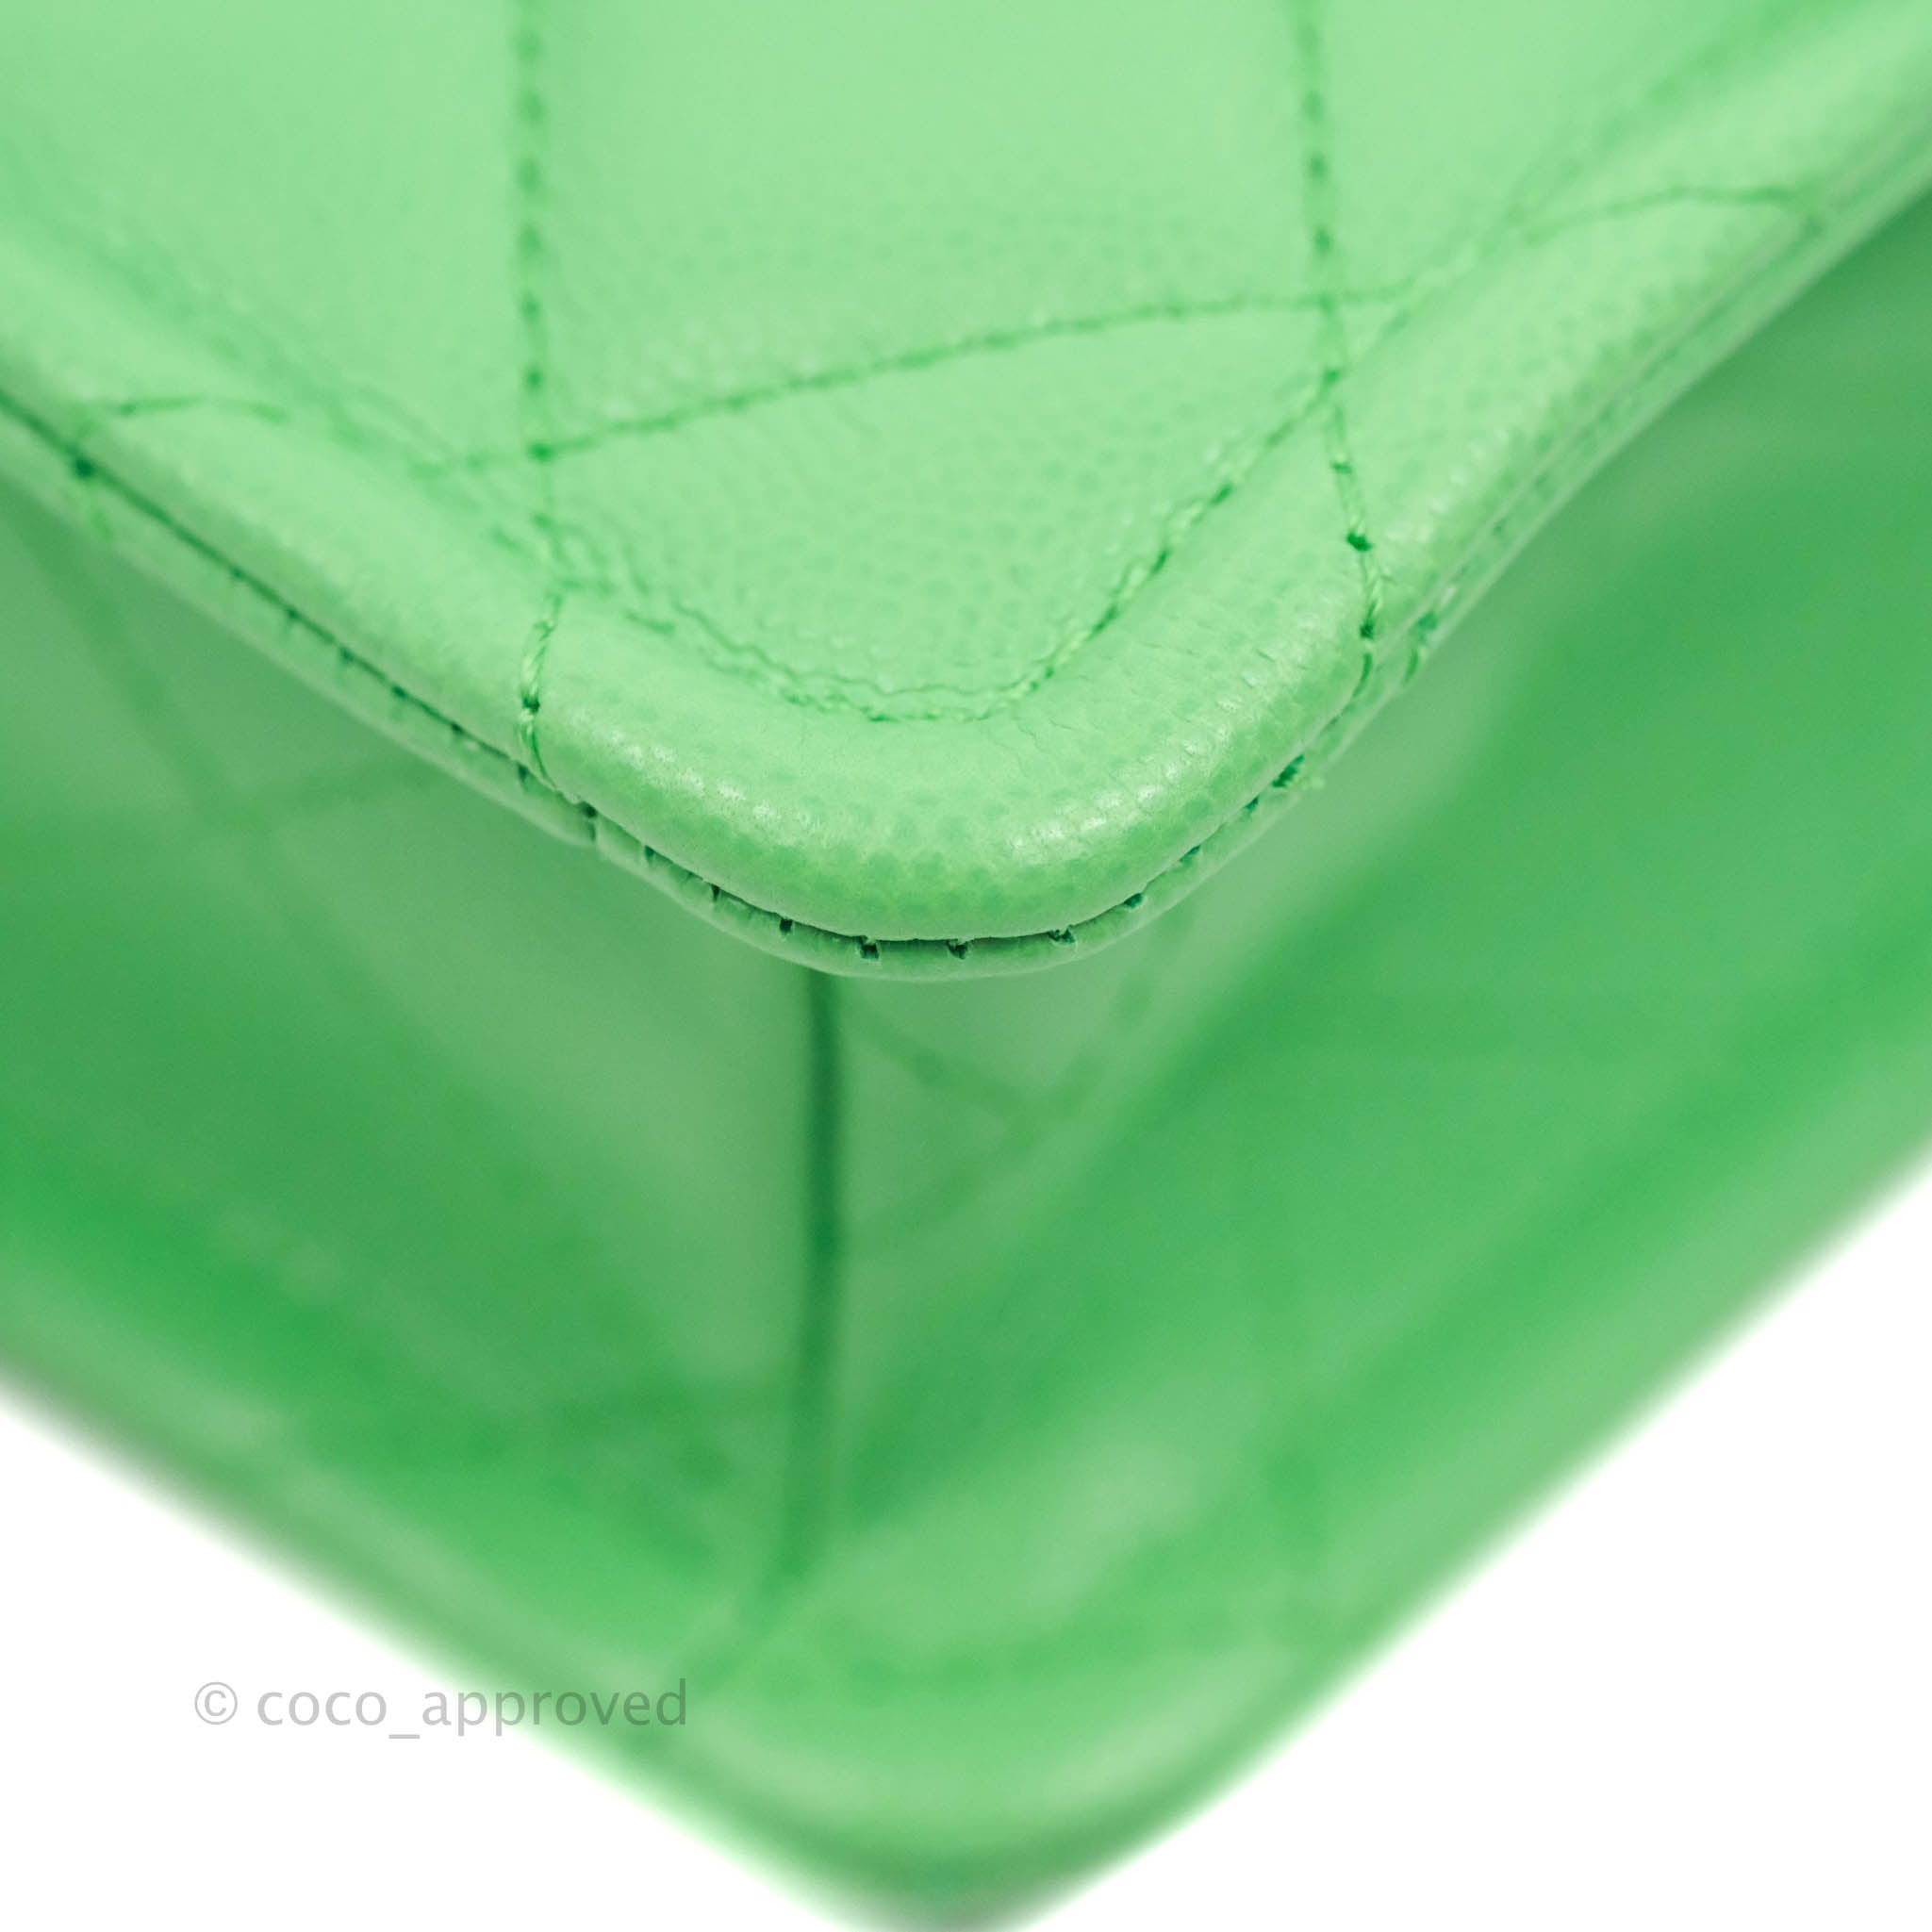 green chanel bag 2020